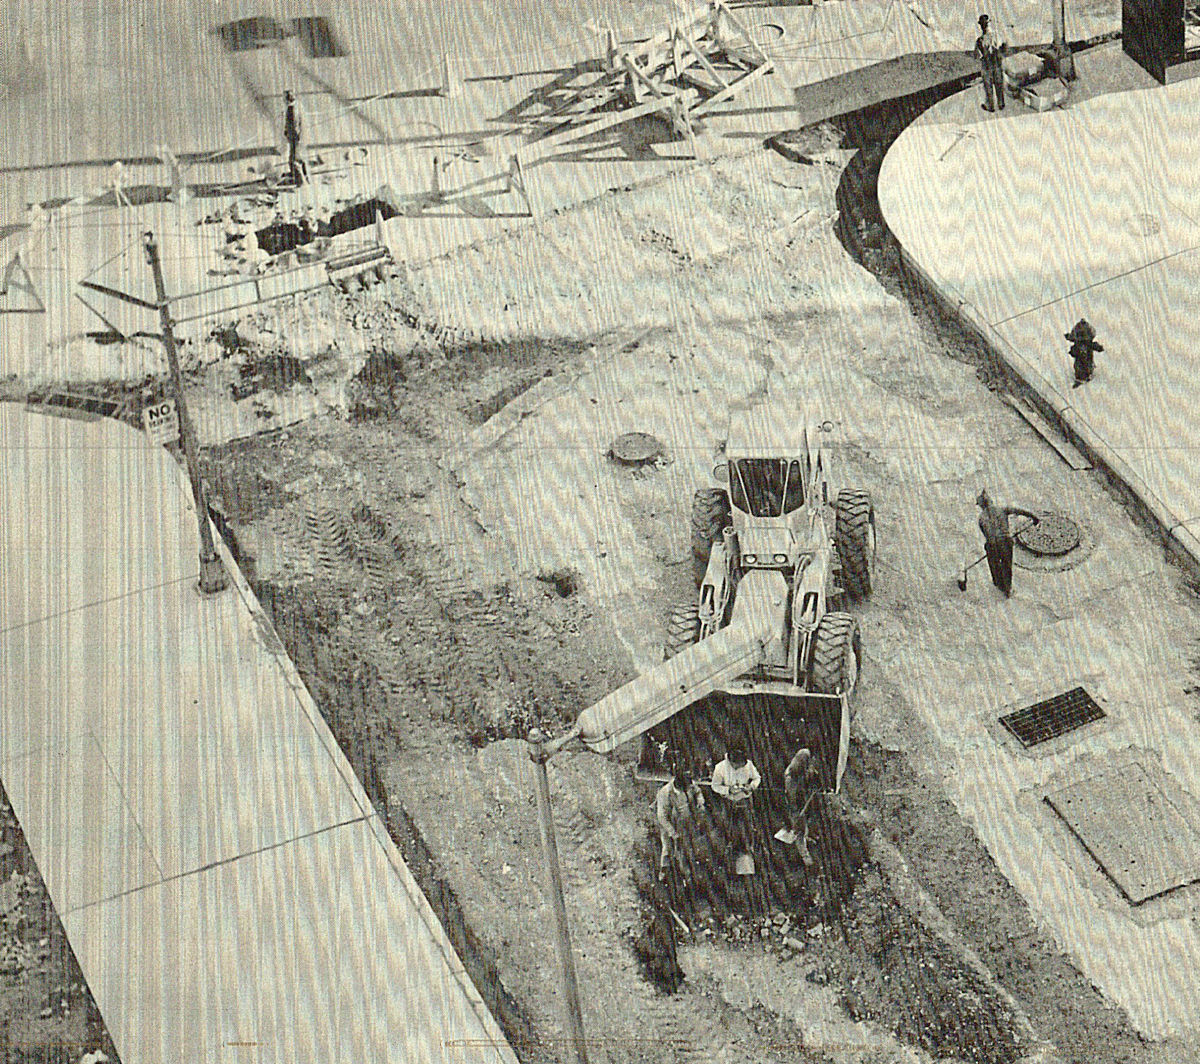 Hill Street & Broad Street
Street Work
Photo from the Newark Municipal Yearbook 1953
